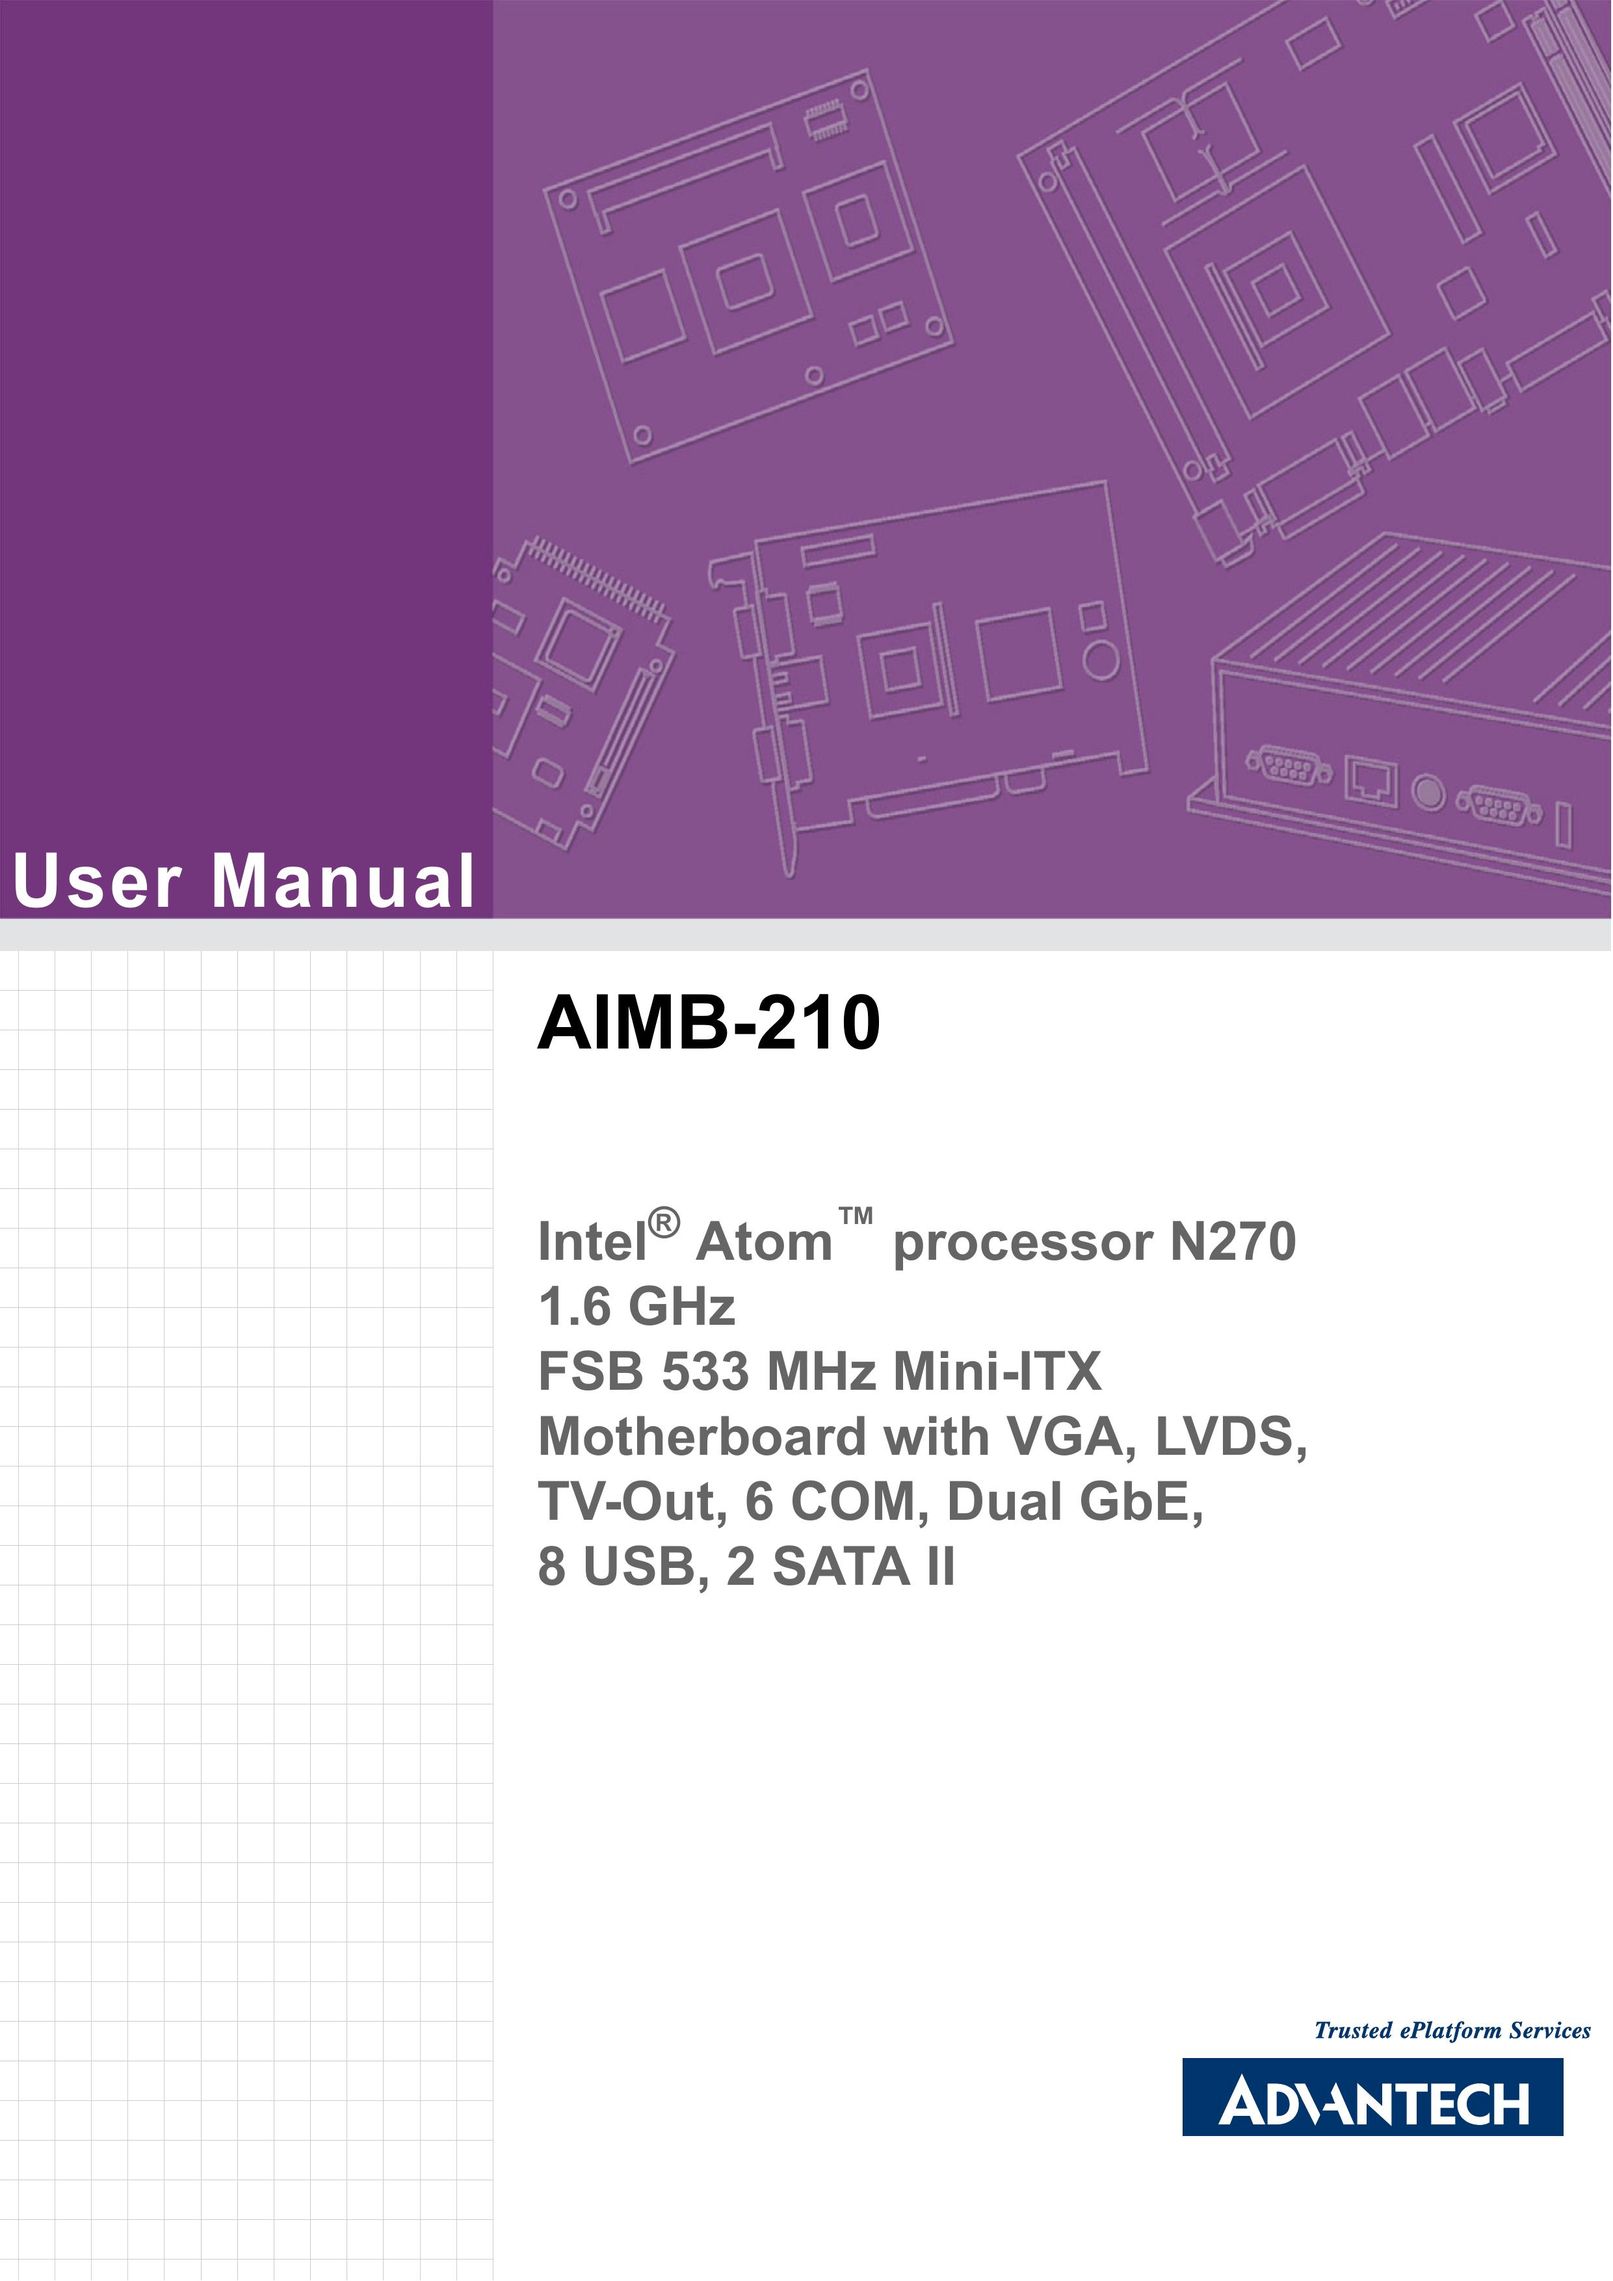 Advantech AIMB-210 Computer Hardware User Manual